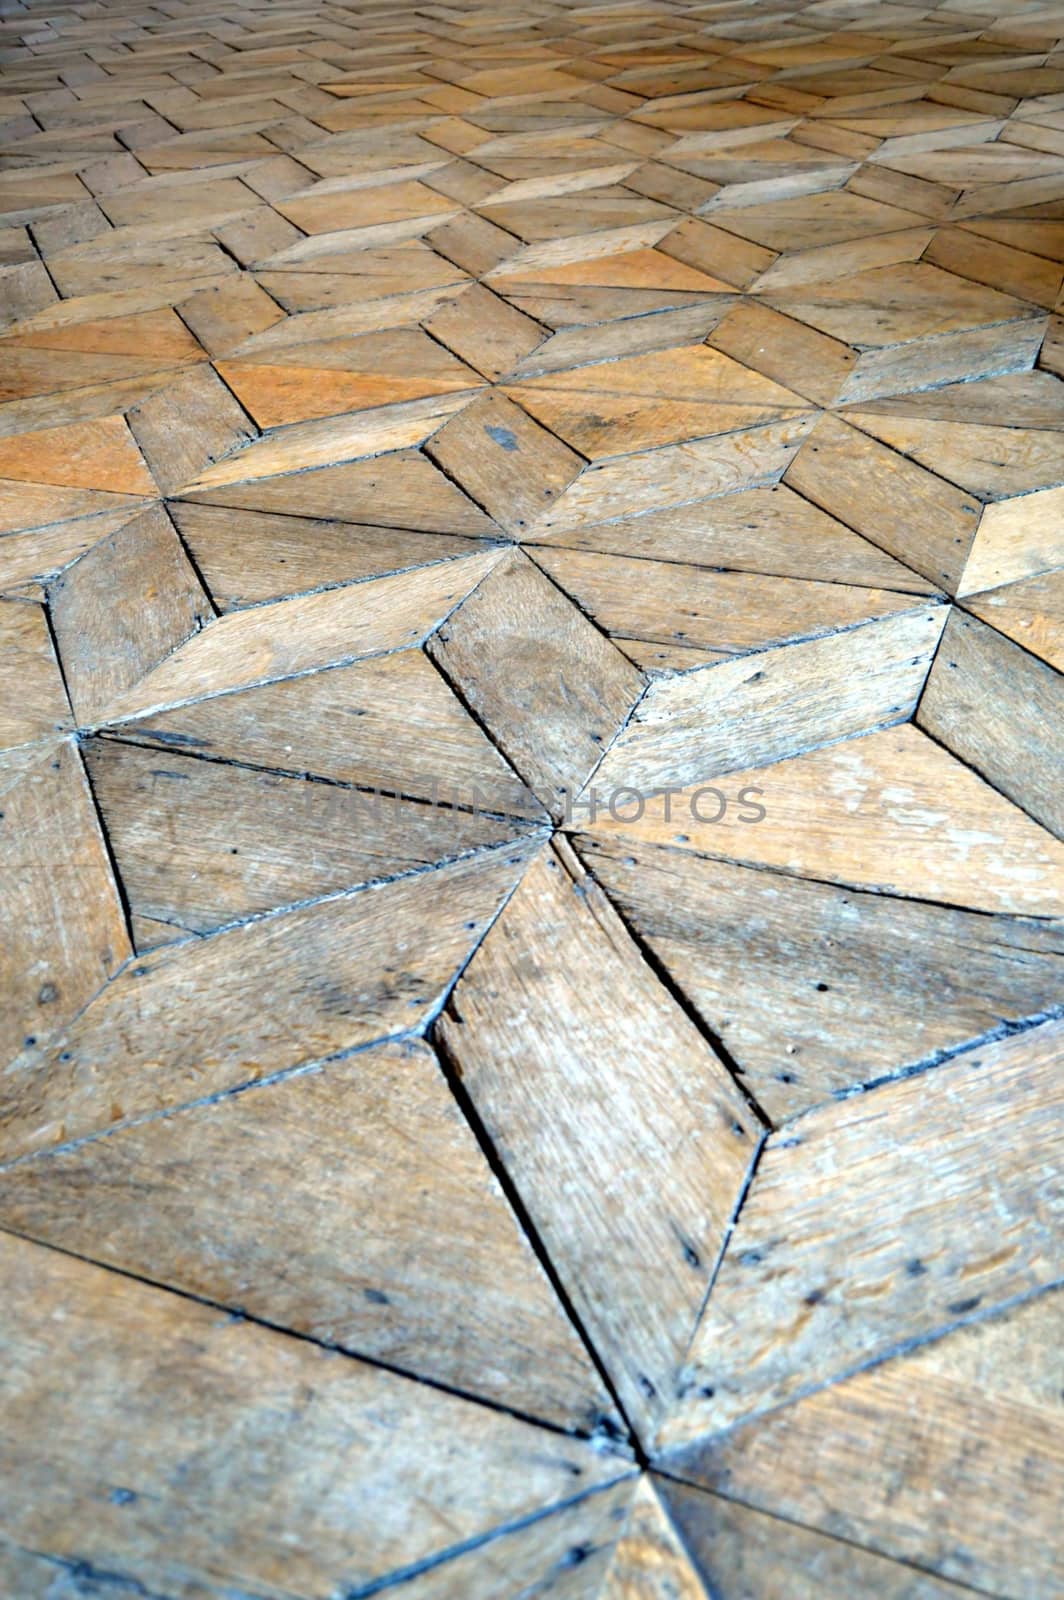 Oak floor with diamond-shaped relief